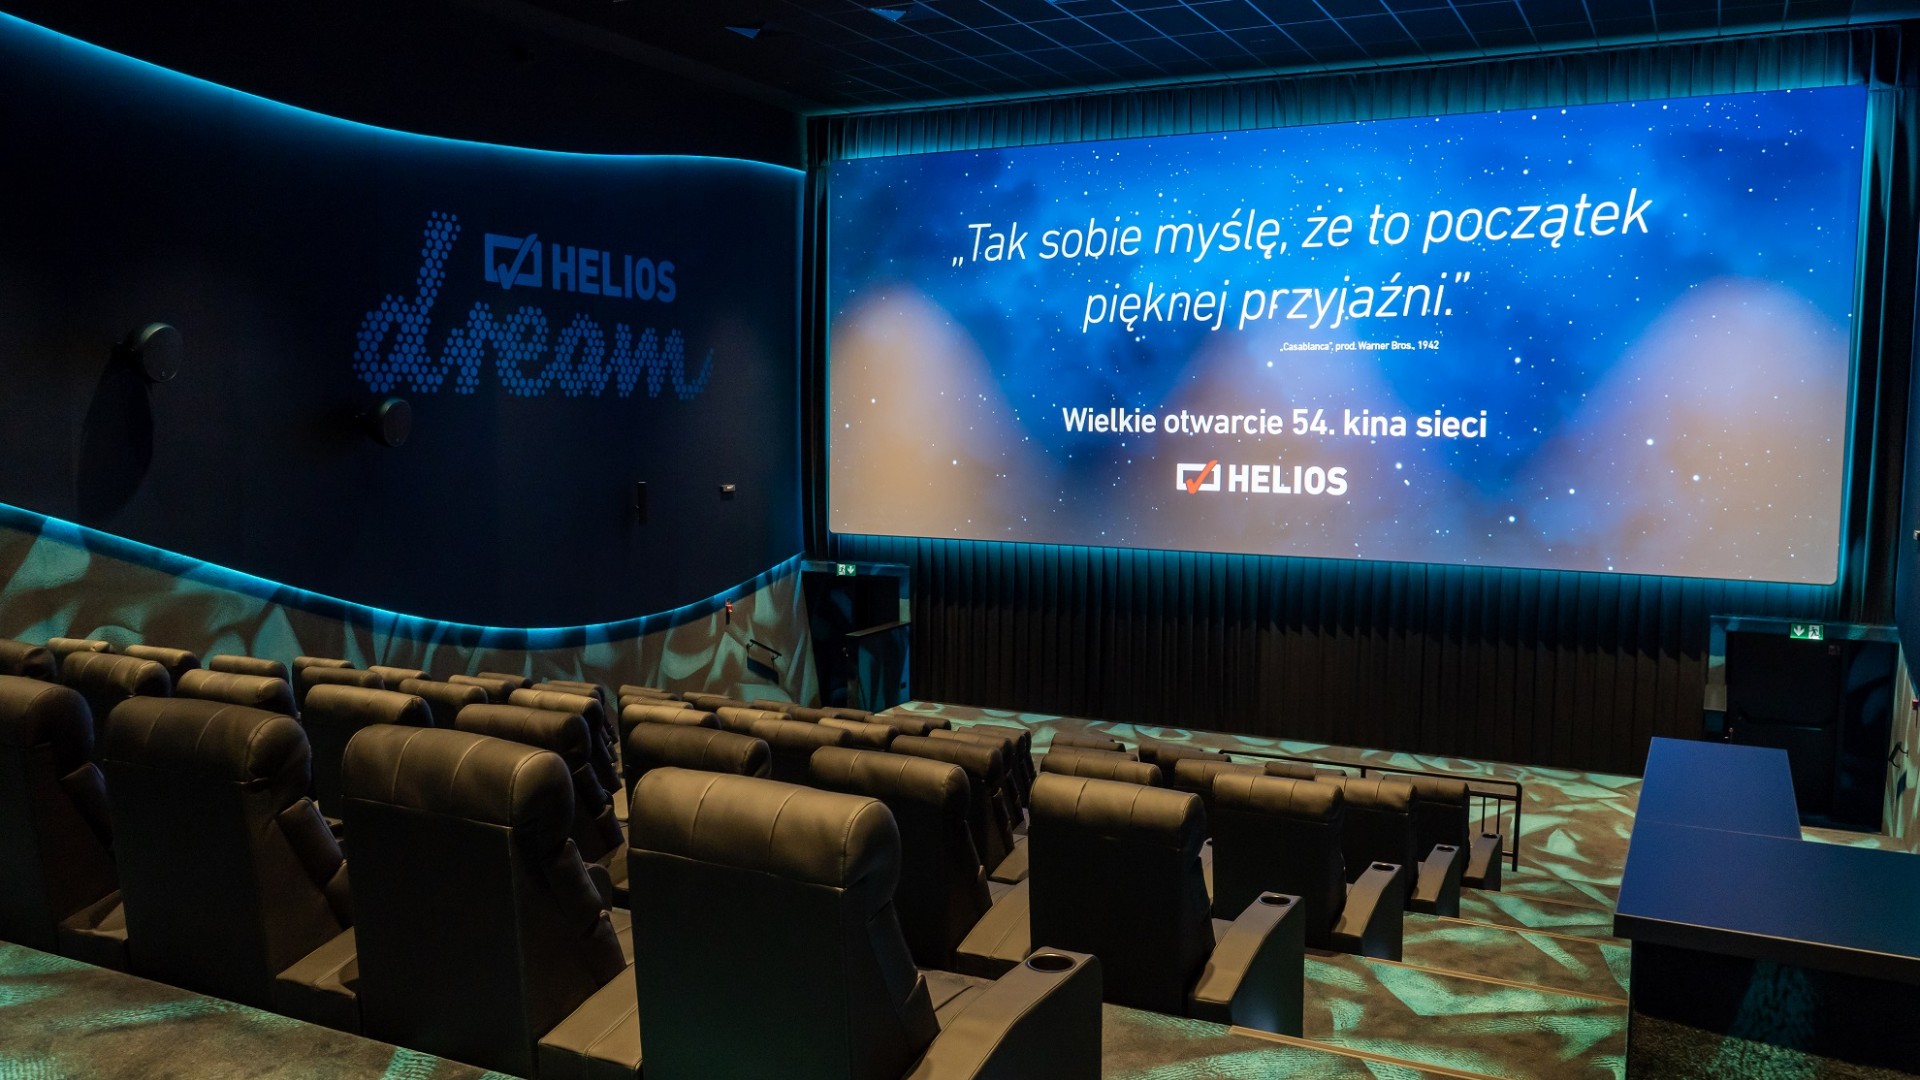 Grand opening of Helios cinema in Koszalin tomorrow!